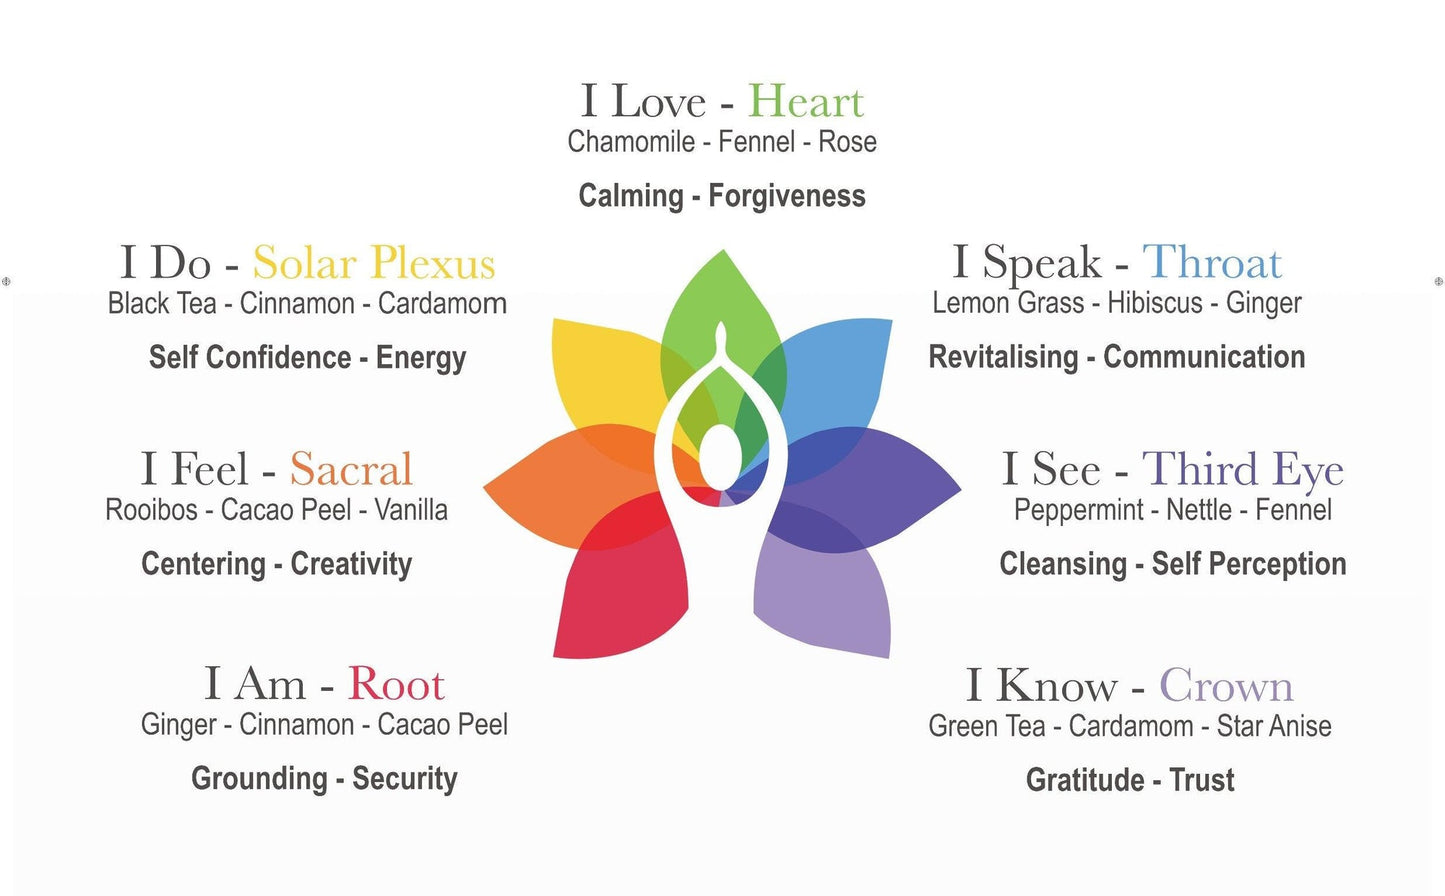 I Am - Root Chakra Organic Pyramid Teabags